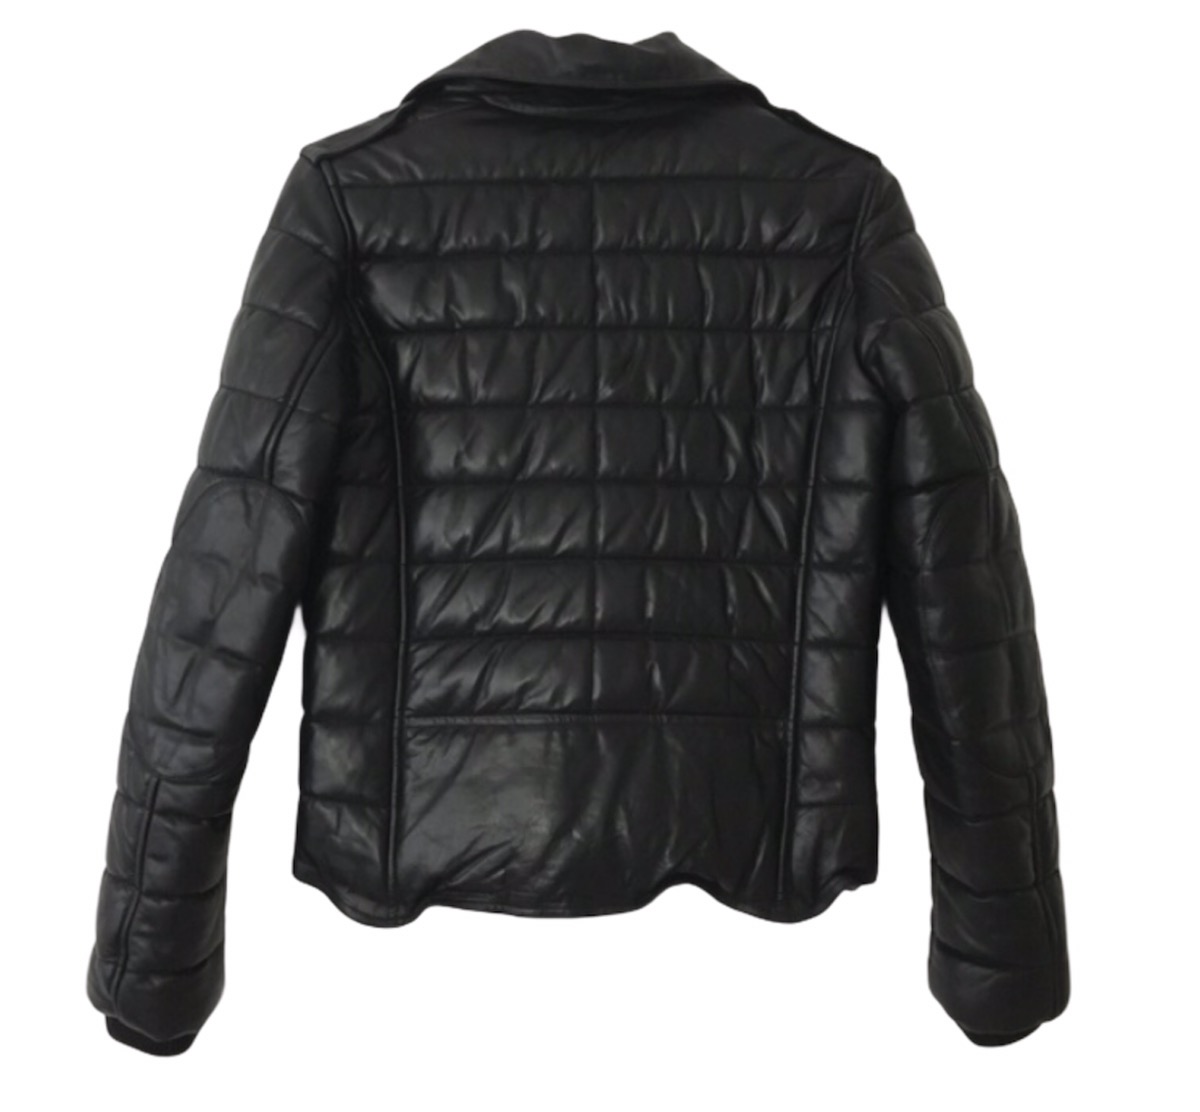 Rare Alexander Wang x H&M Padded Leather Biker Jacket